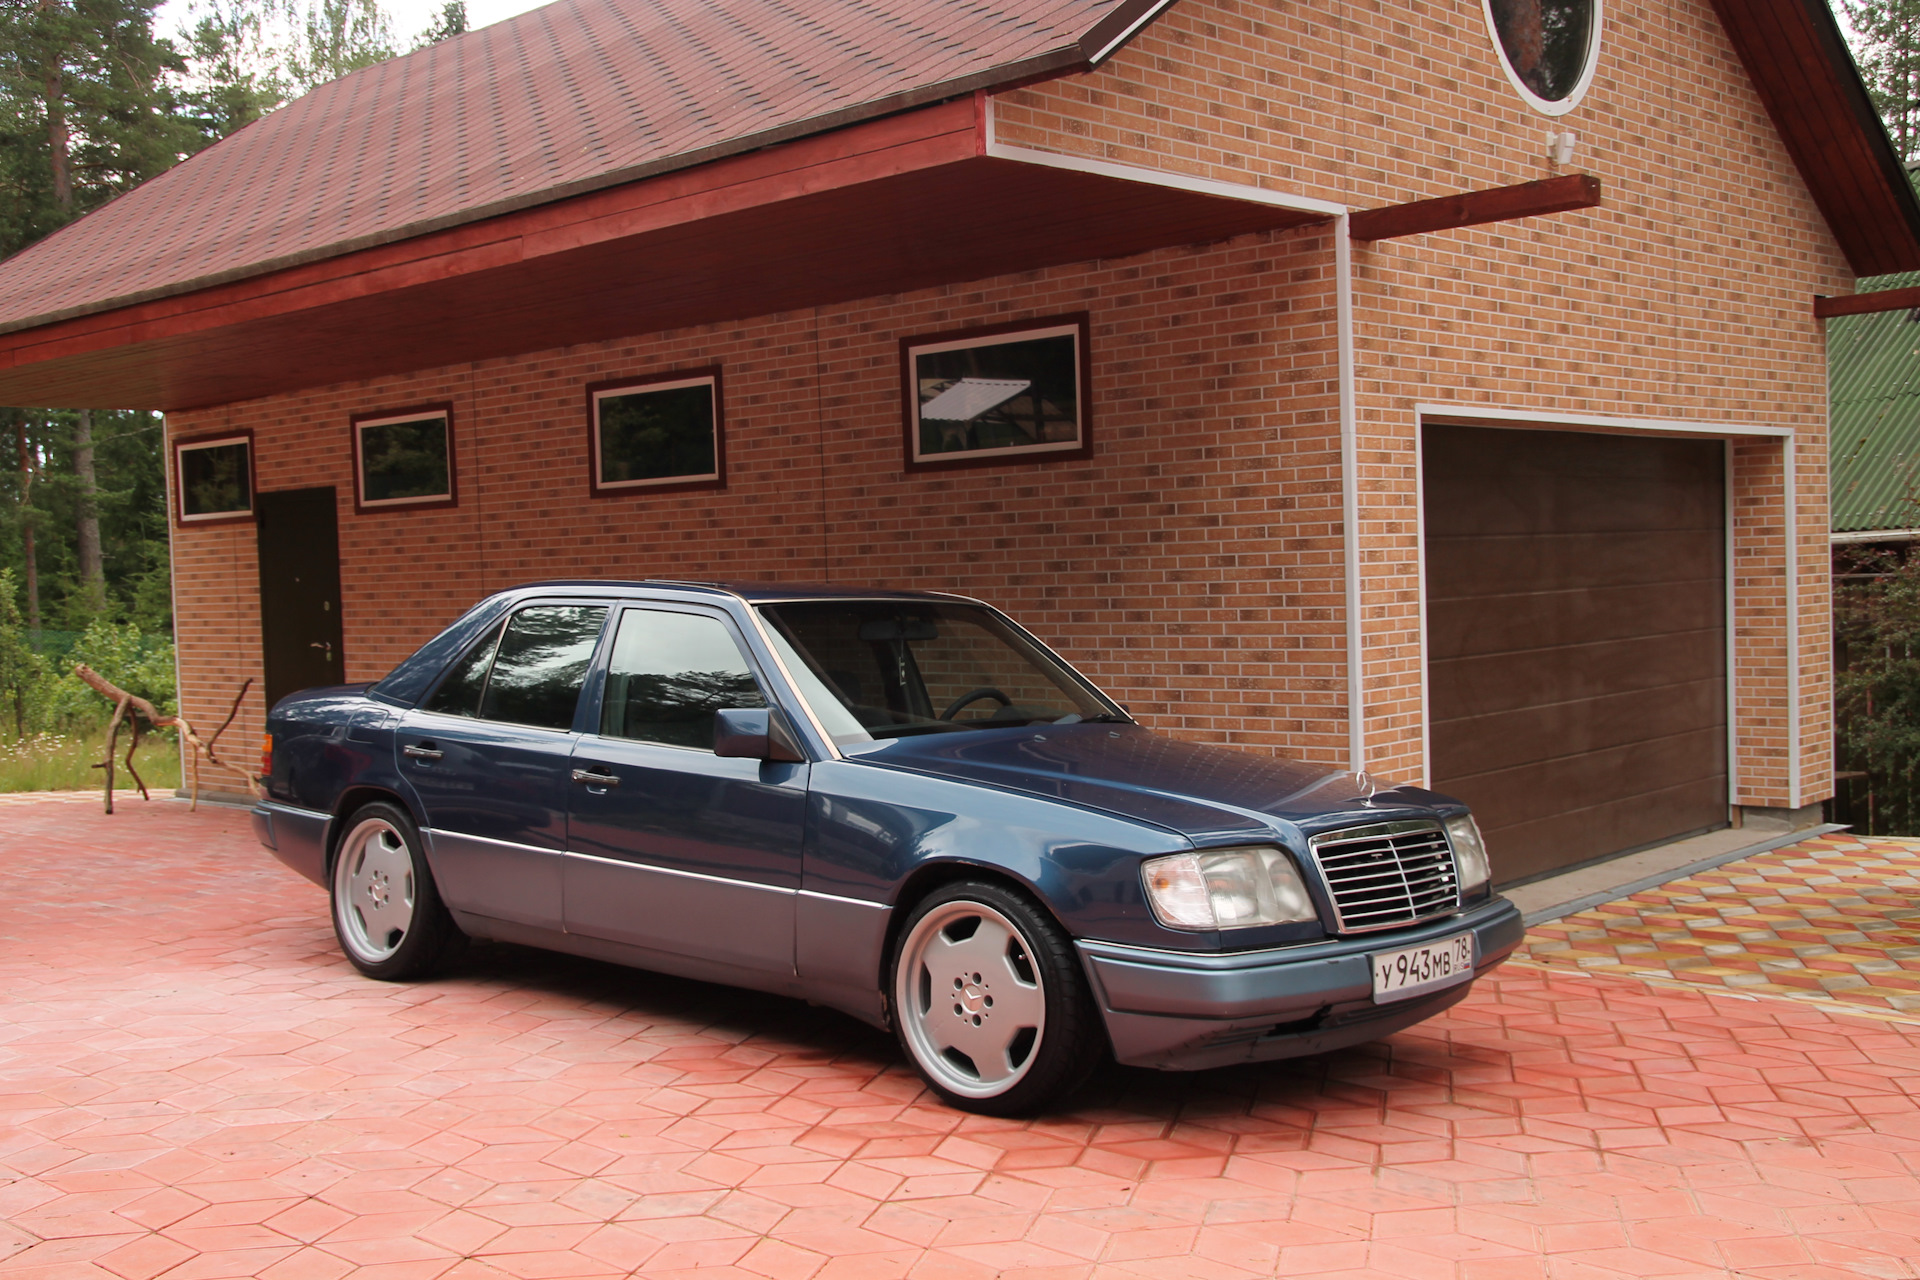 Mercedes 1992. Мерс 1992. Мерседес 1992. E class 1992. Mercedes 1992 a class.